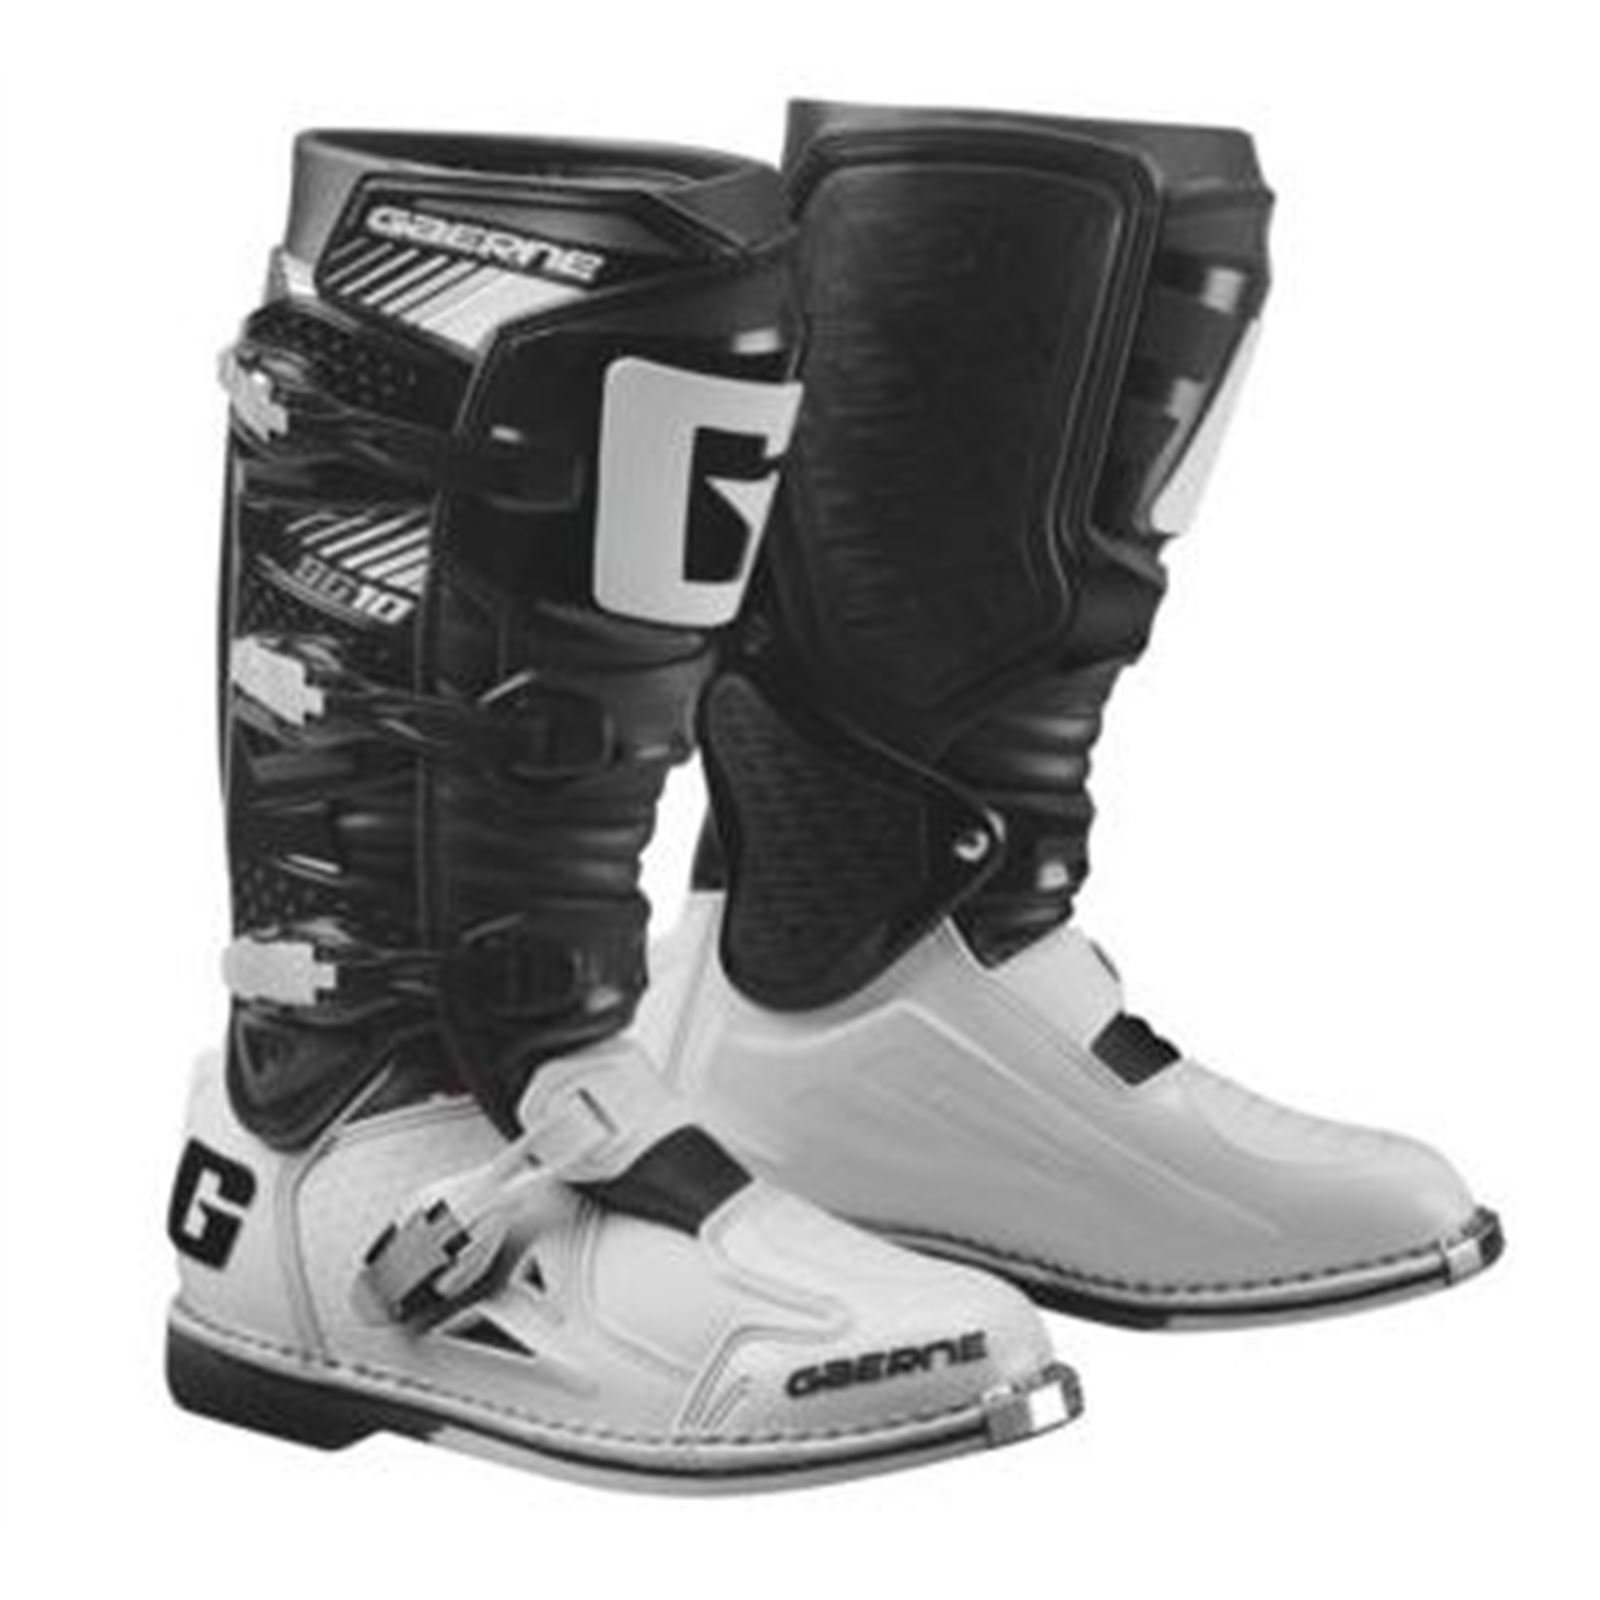 Gaerne SG-10 Boots Black/White 10